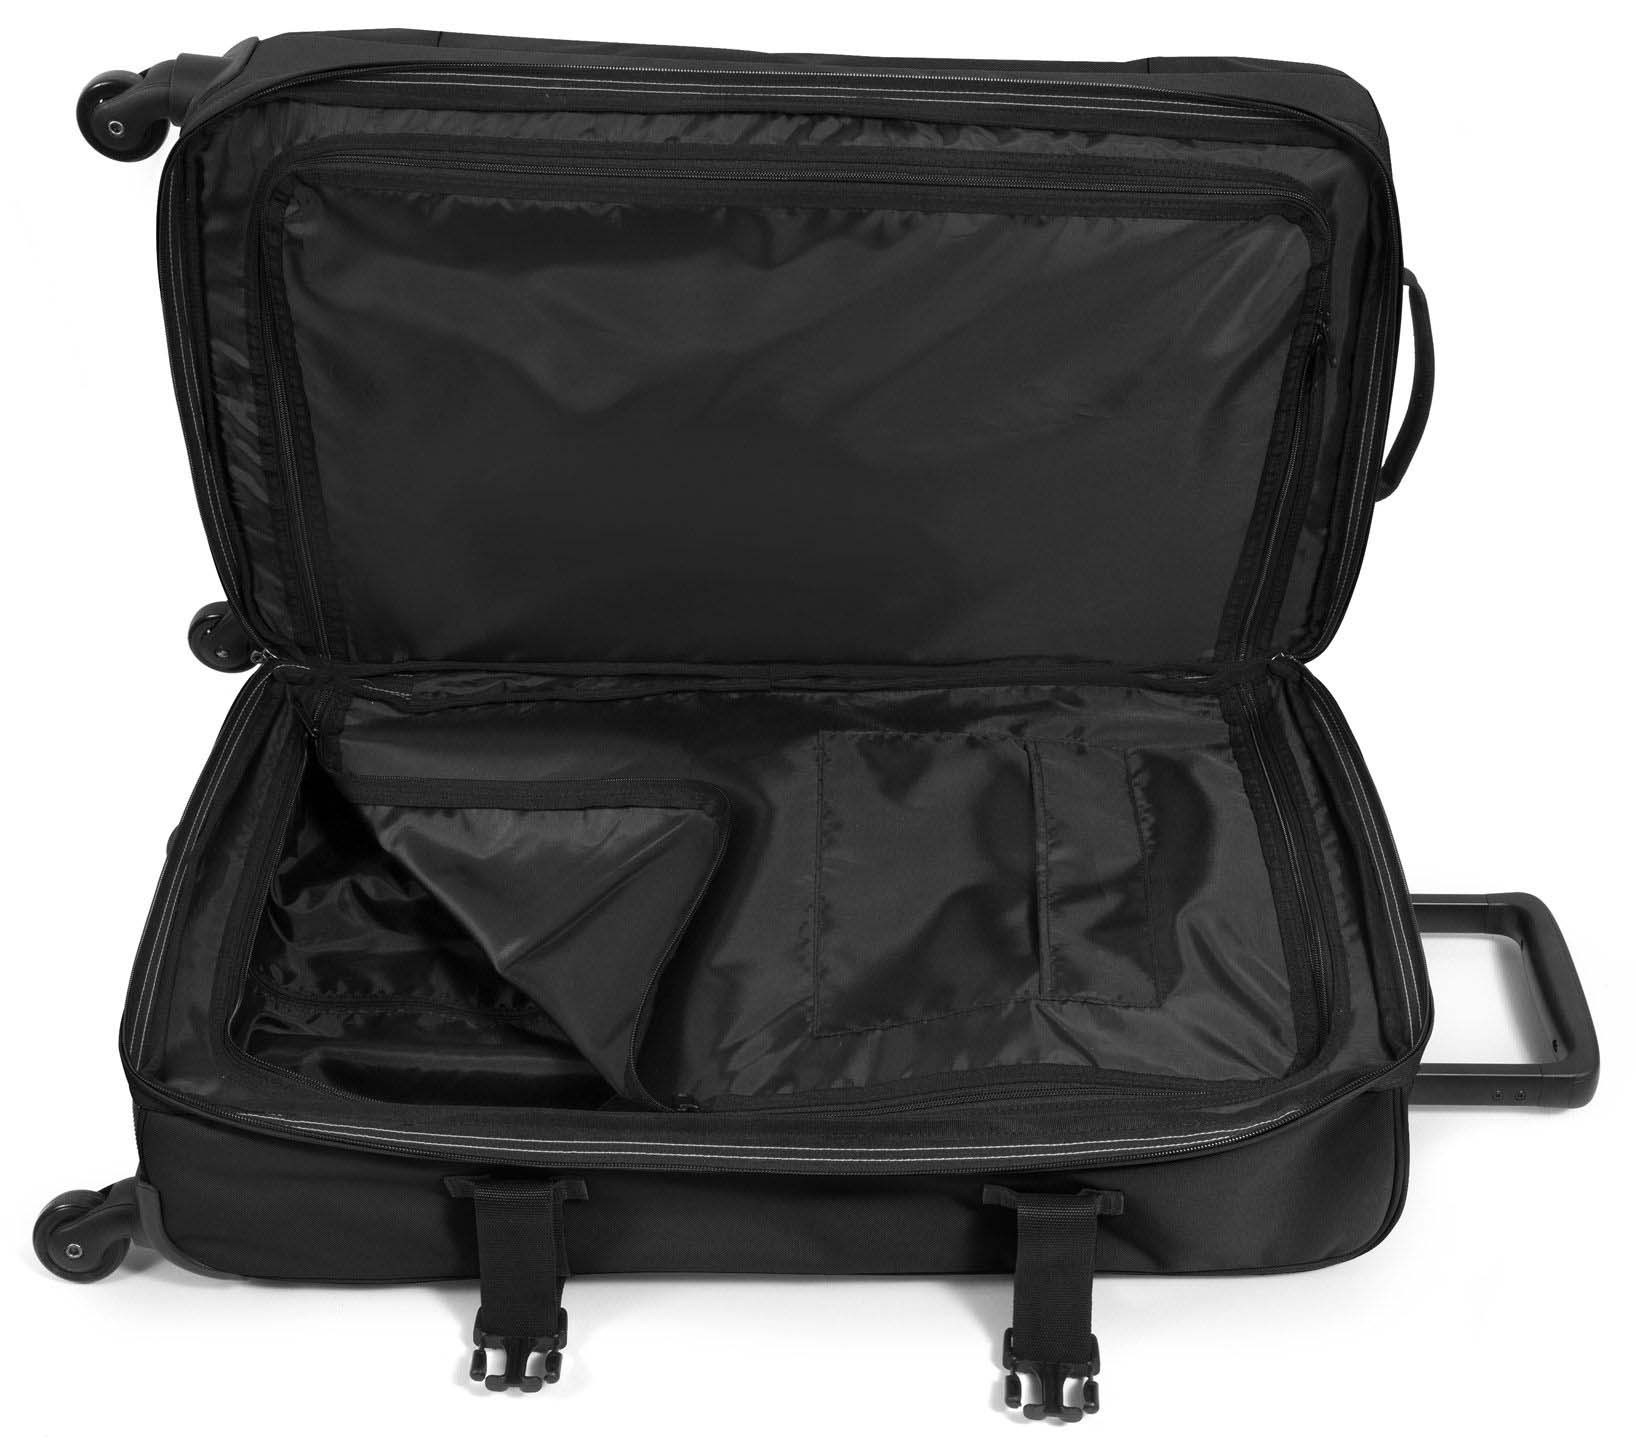 Eastpak Trans4 M 68 Litres Wheeled Luggage